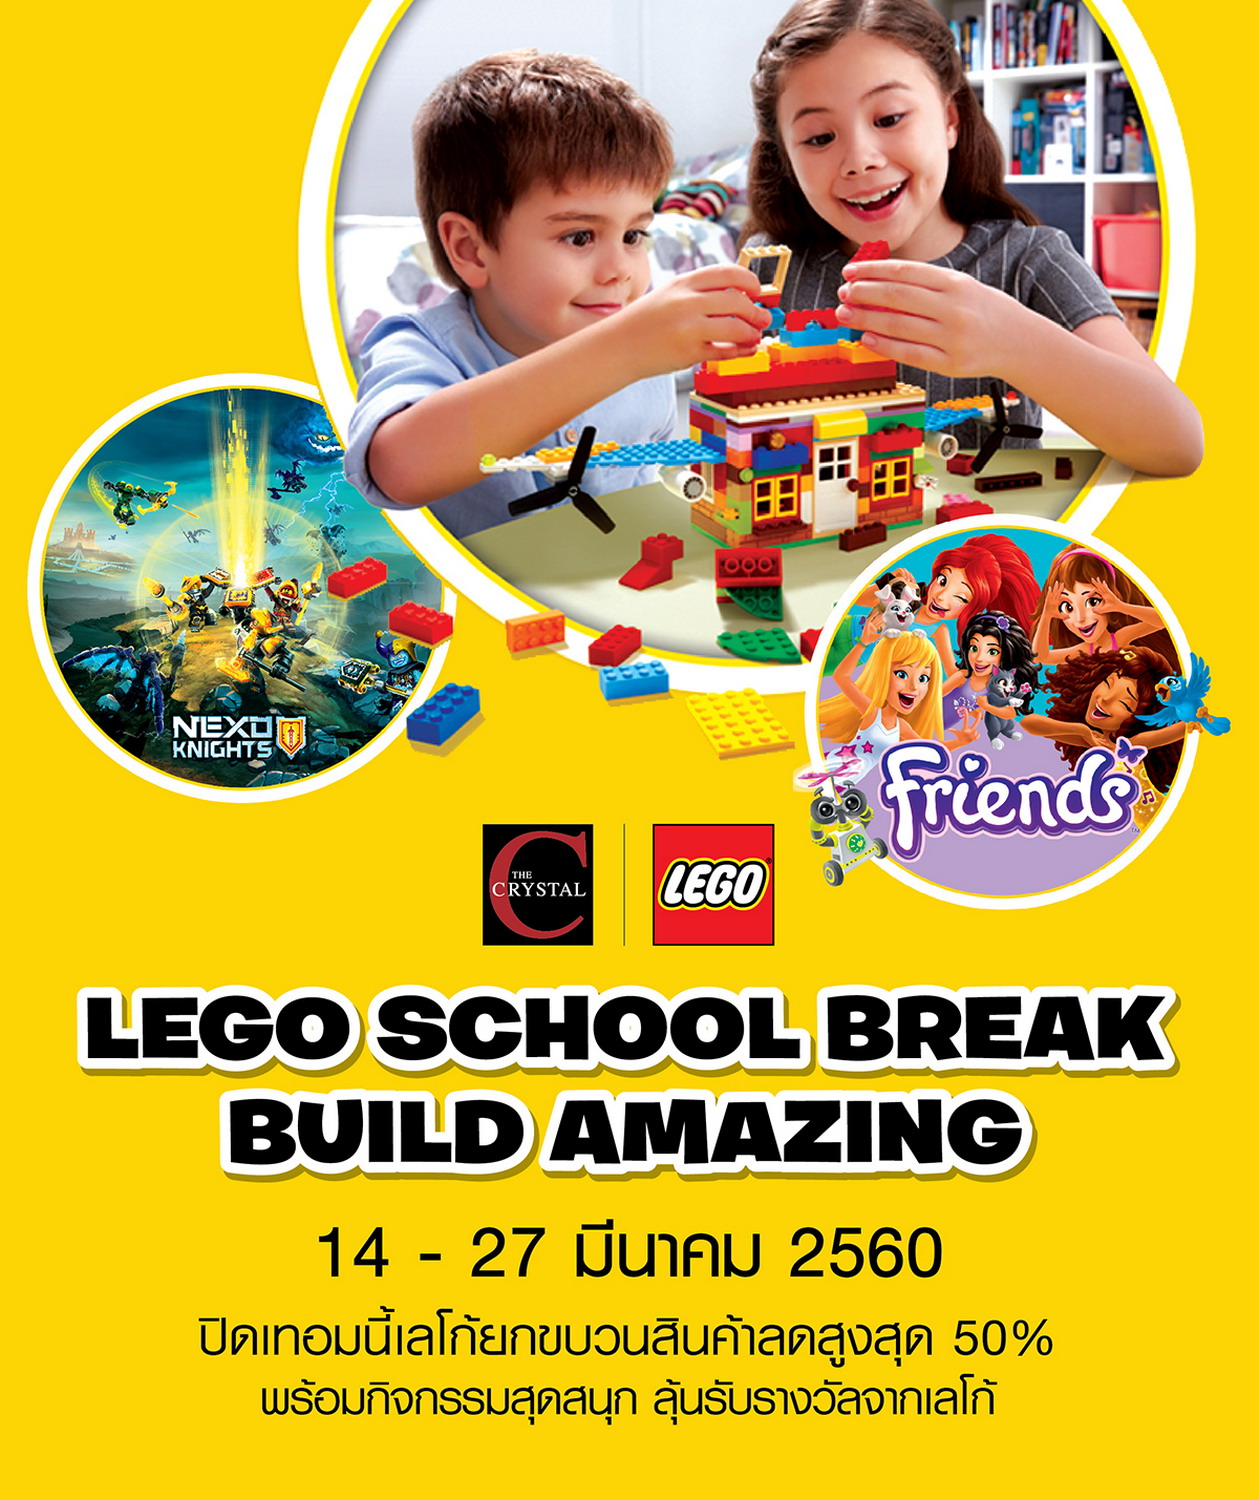 Lego School Break Build Amazing